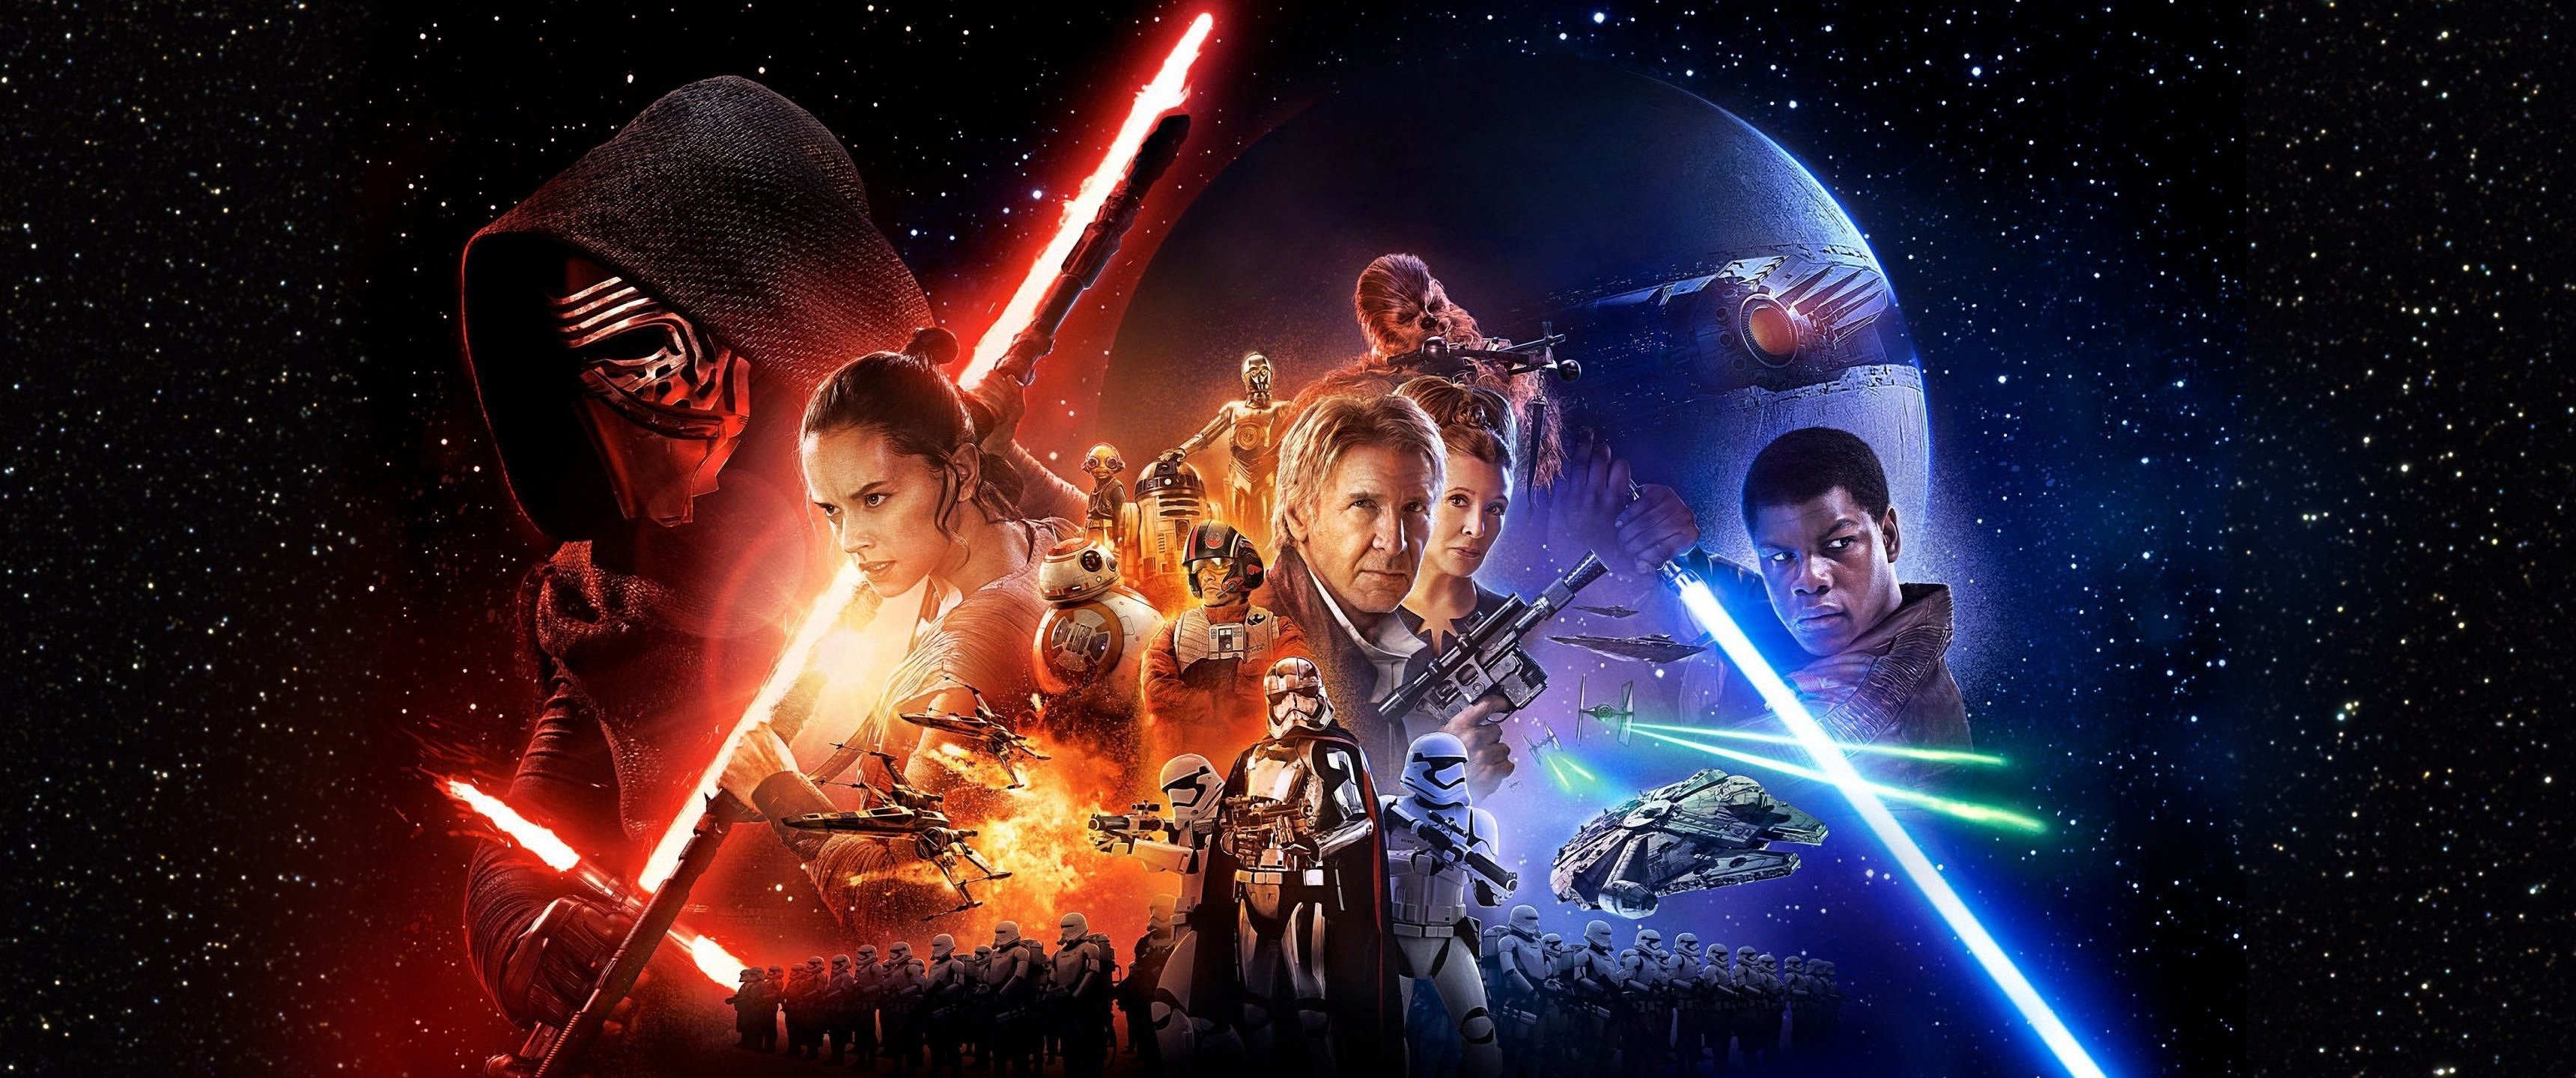 star wars the force awakens full movie free stream